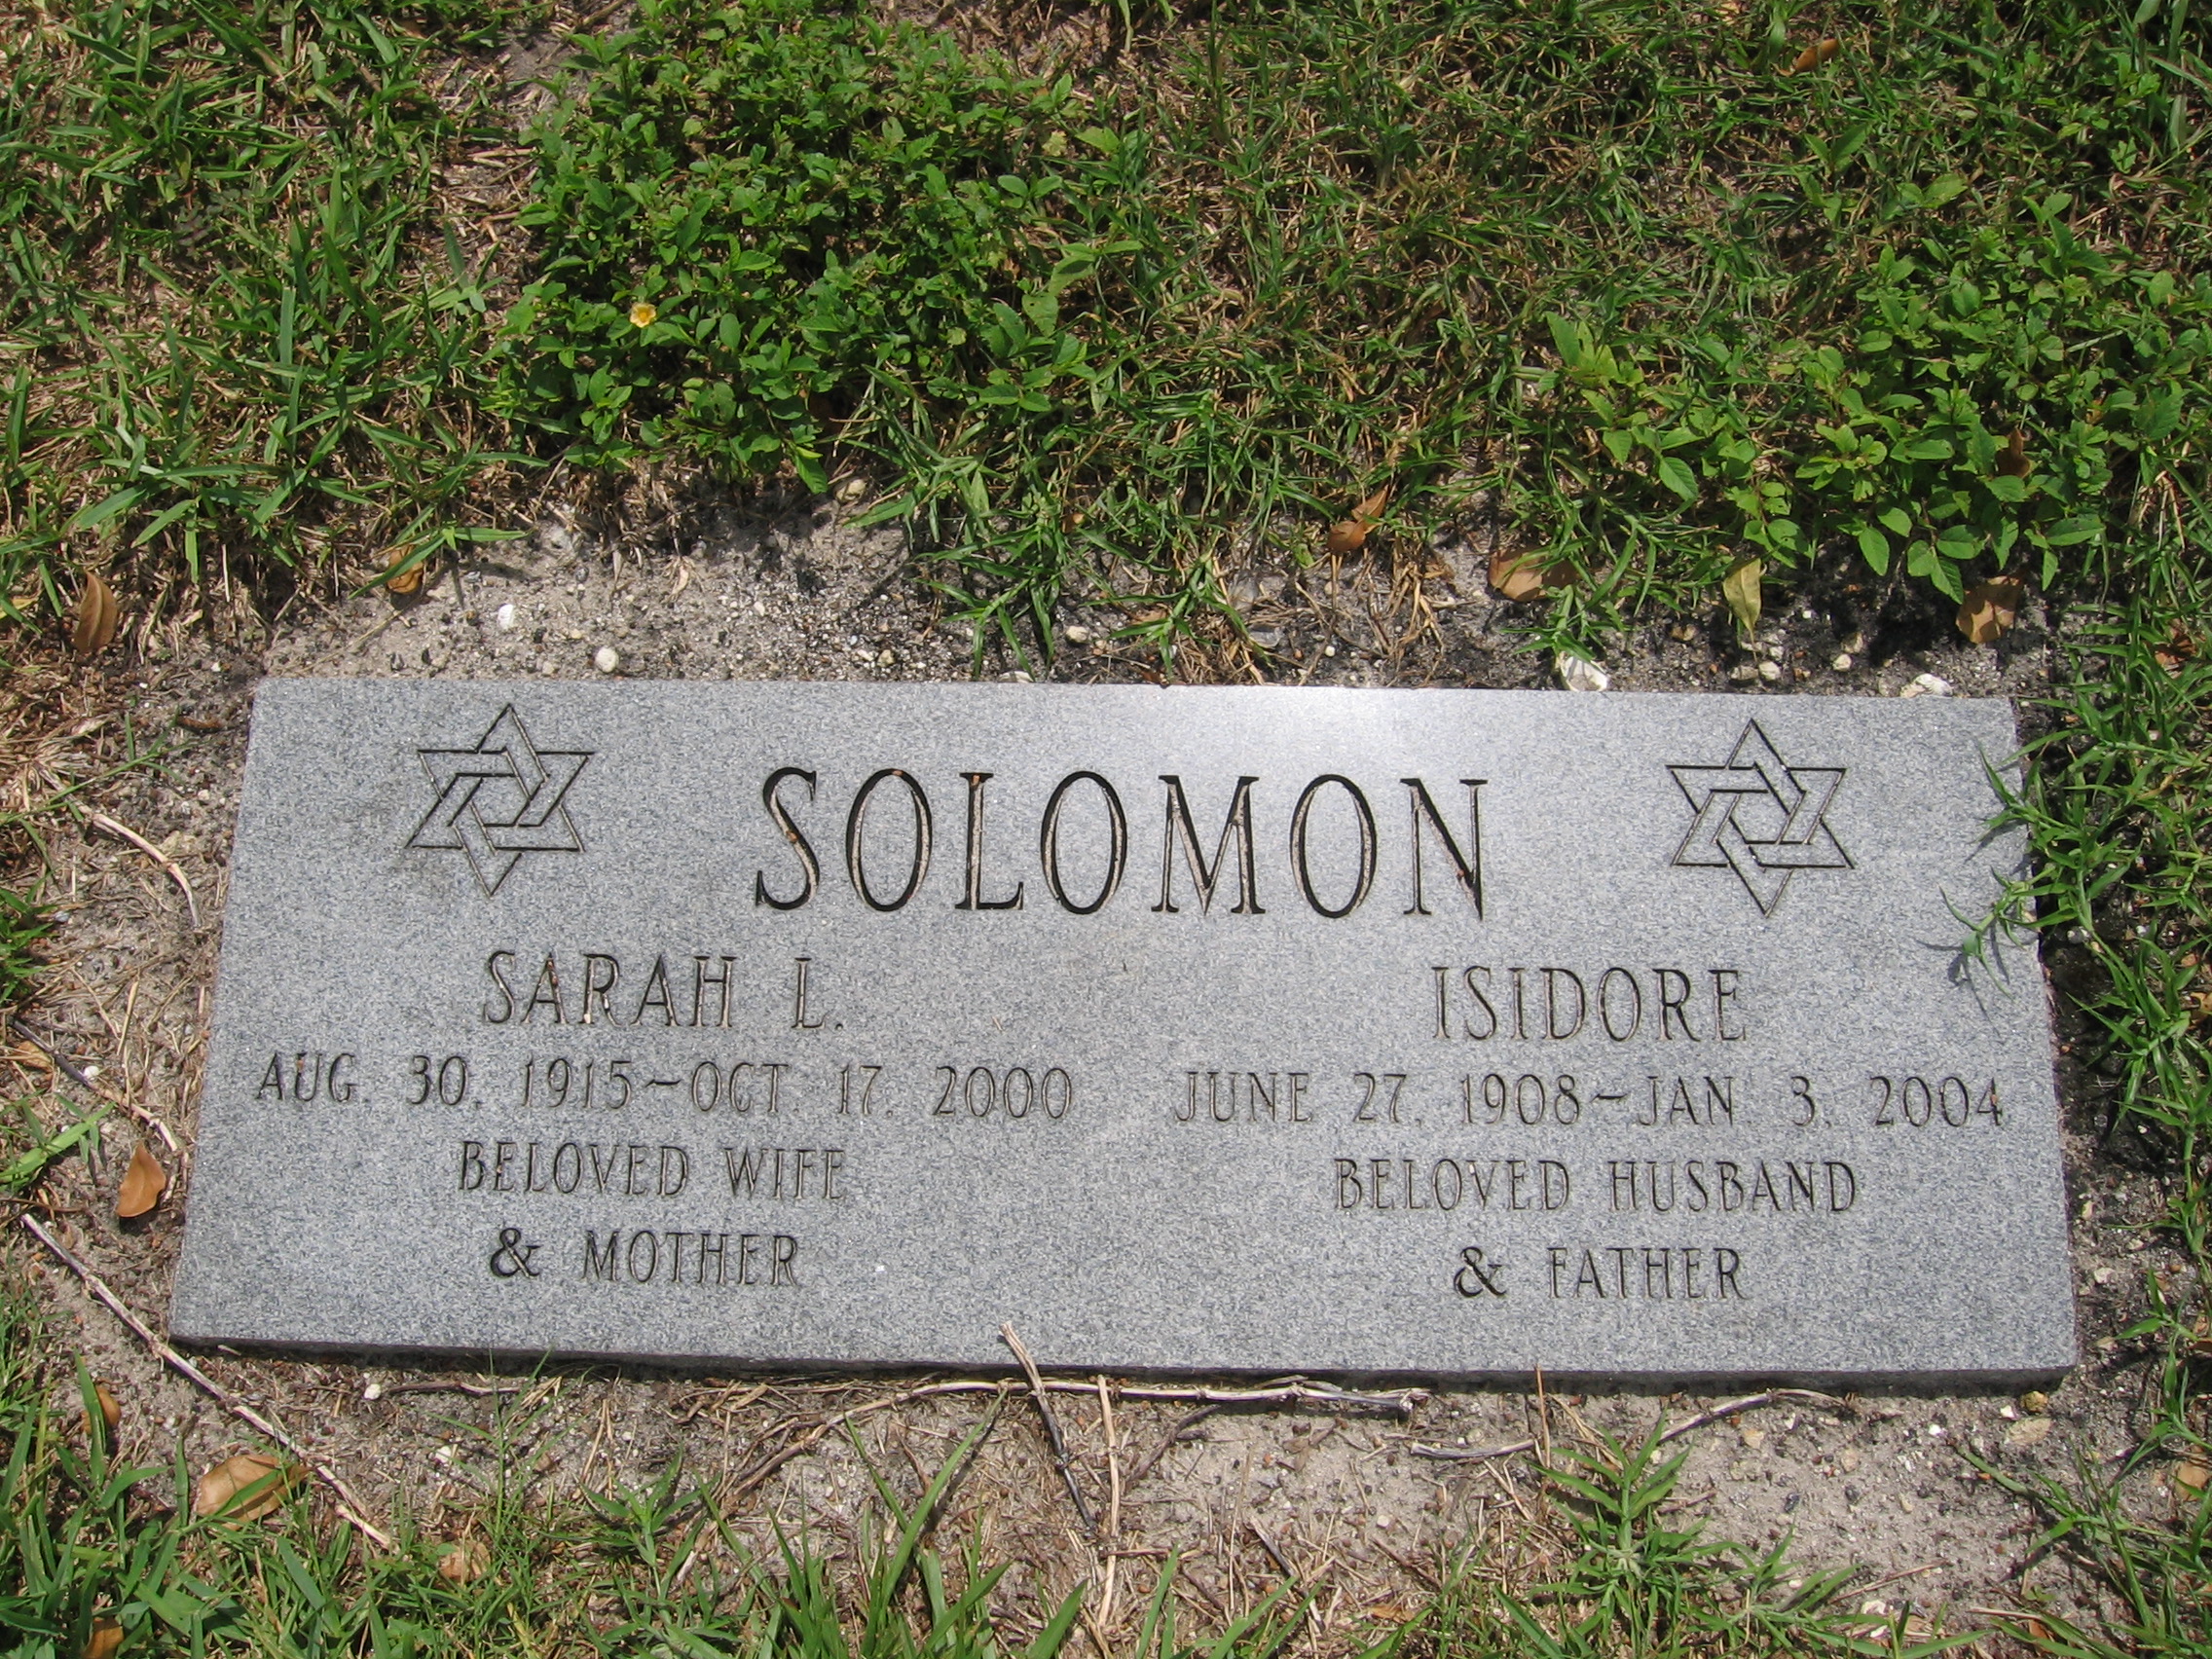 Isidore Solomon